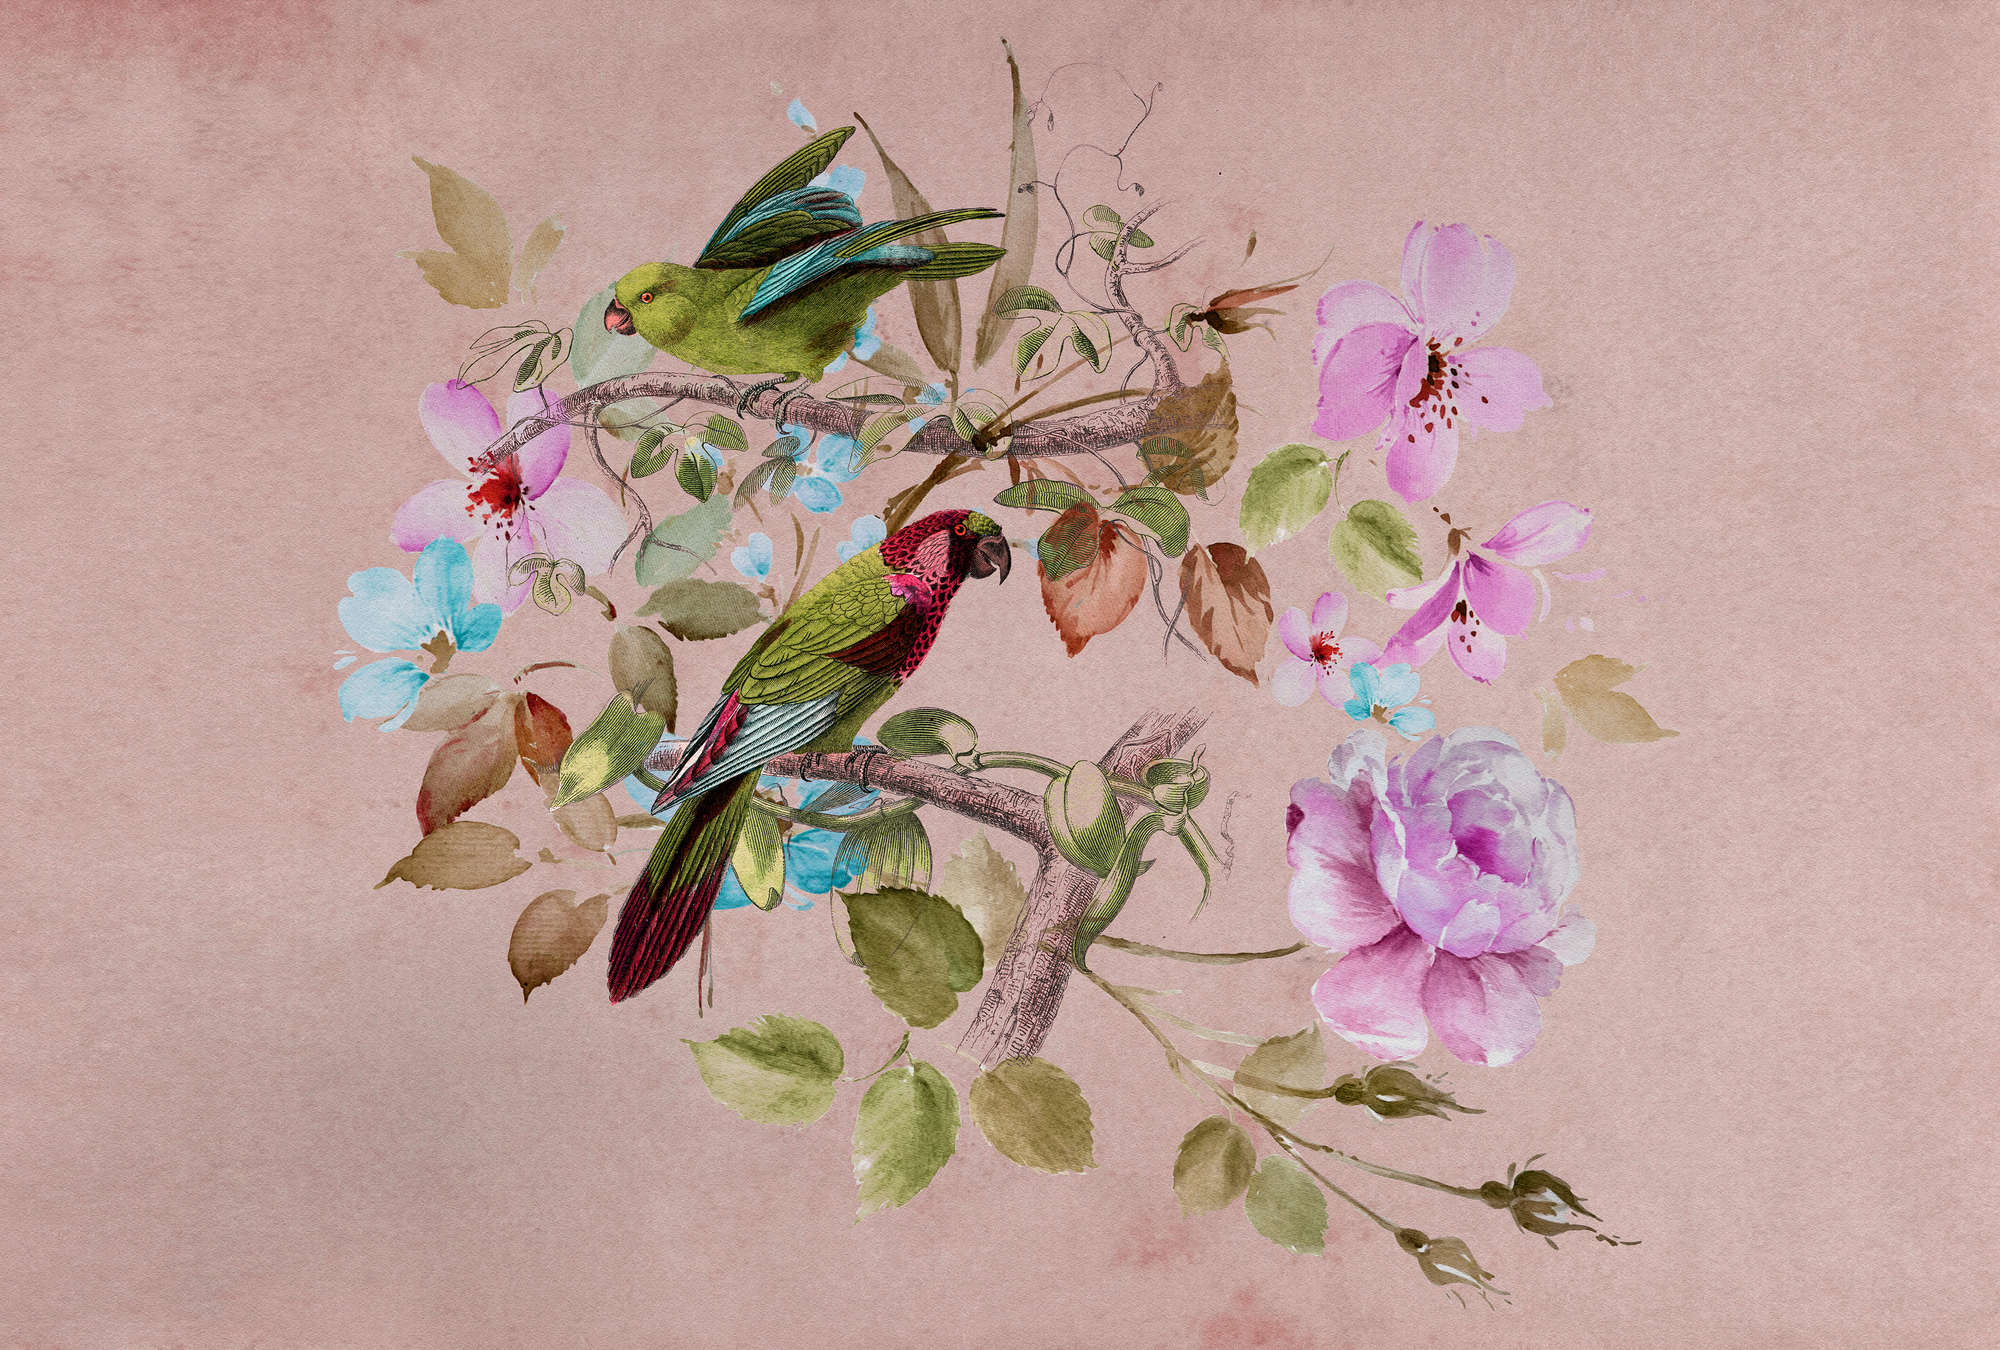             Love Nest 2 – Vintage Fototapete Rosa Aquarell Blumen & buntem Vogel
        